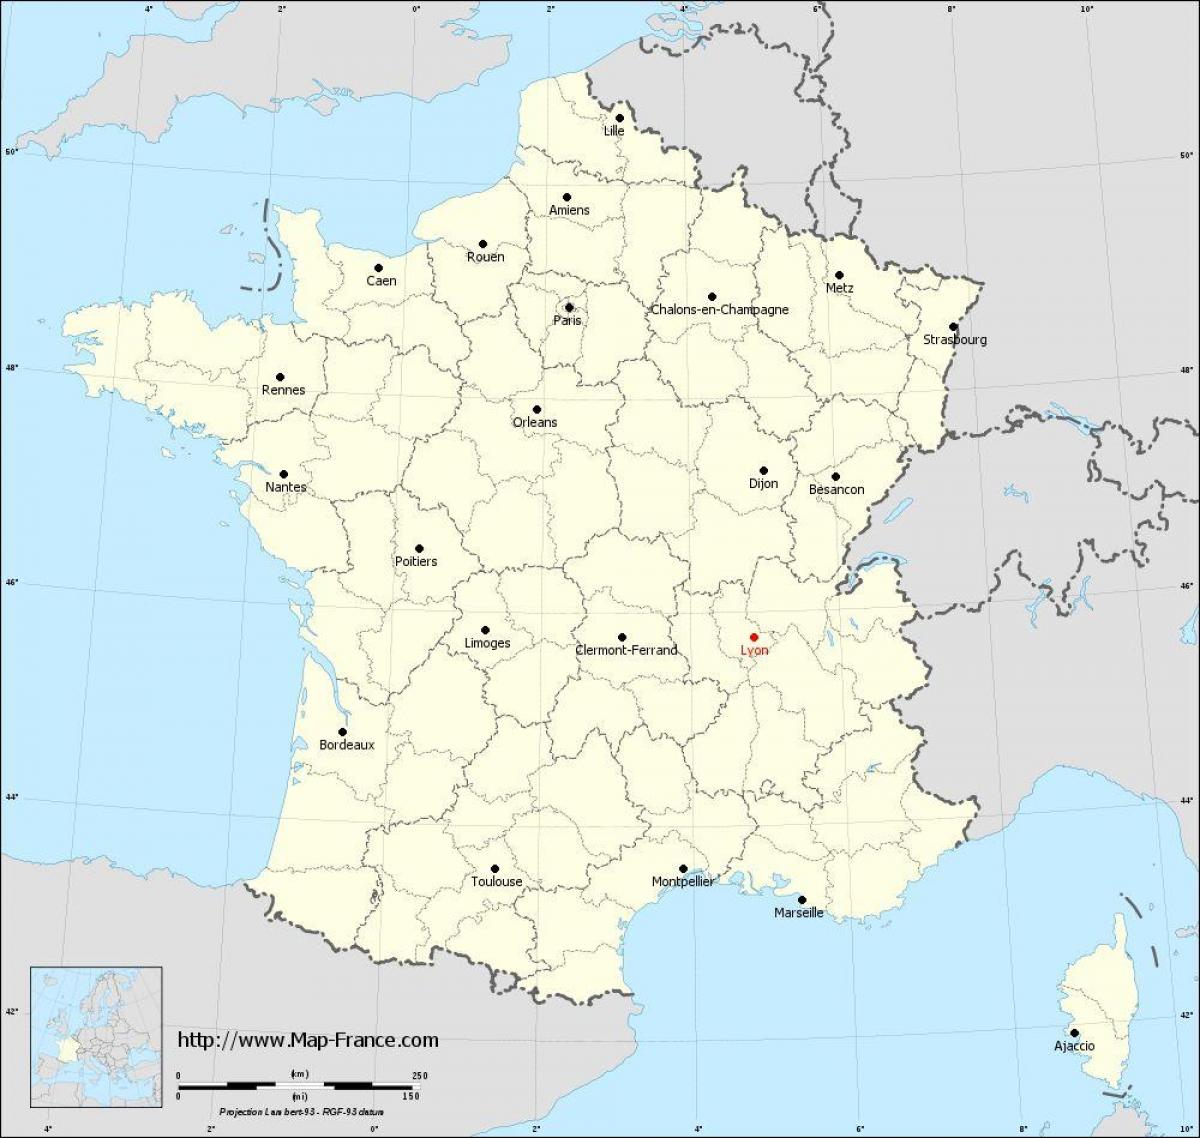 France_ regions. kgm อยู่บนแผนที่